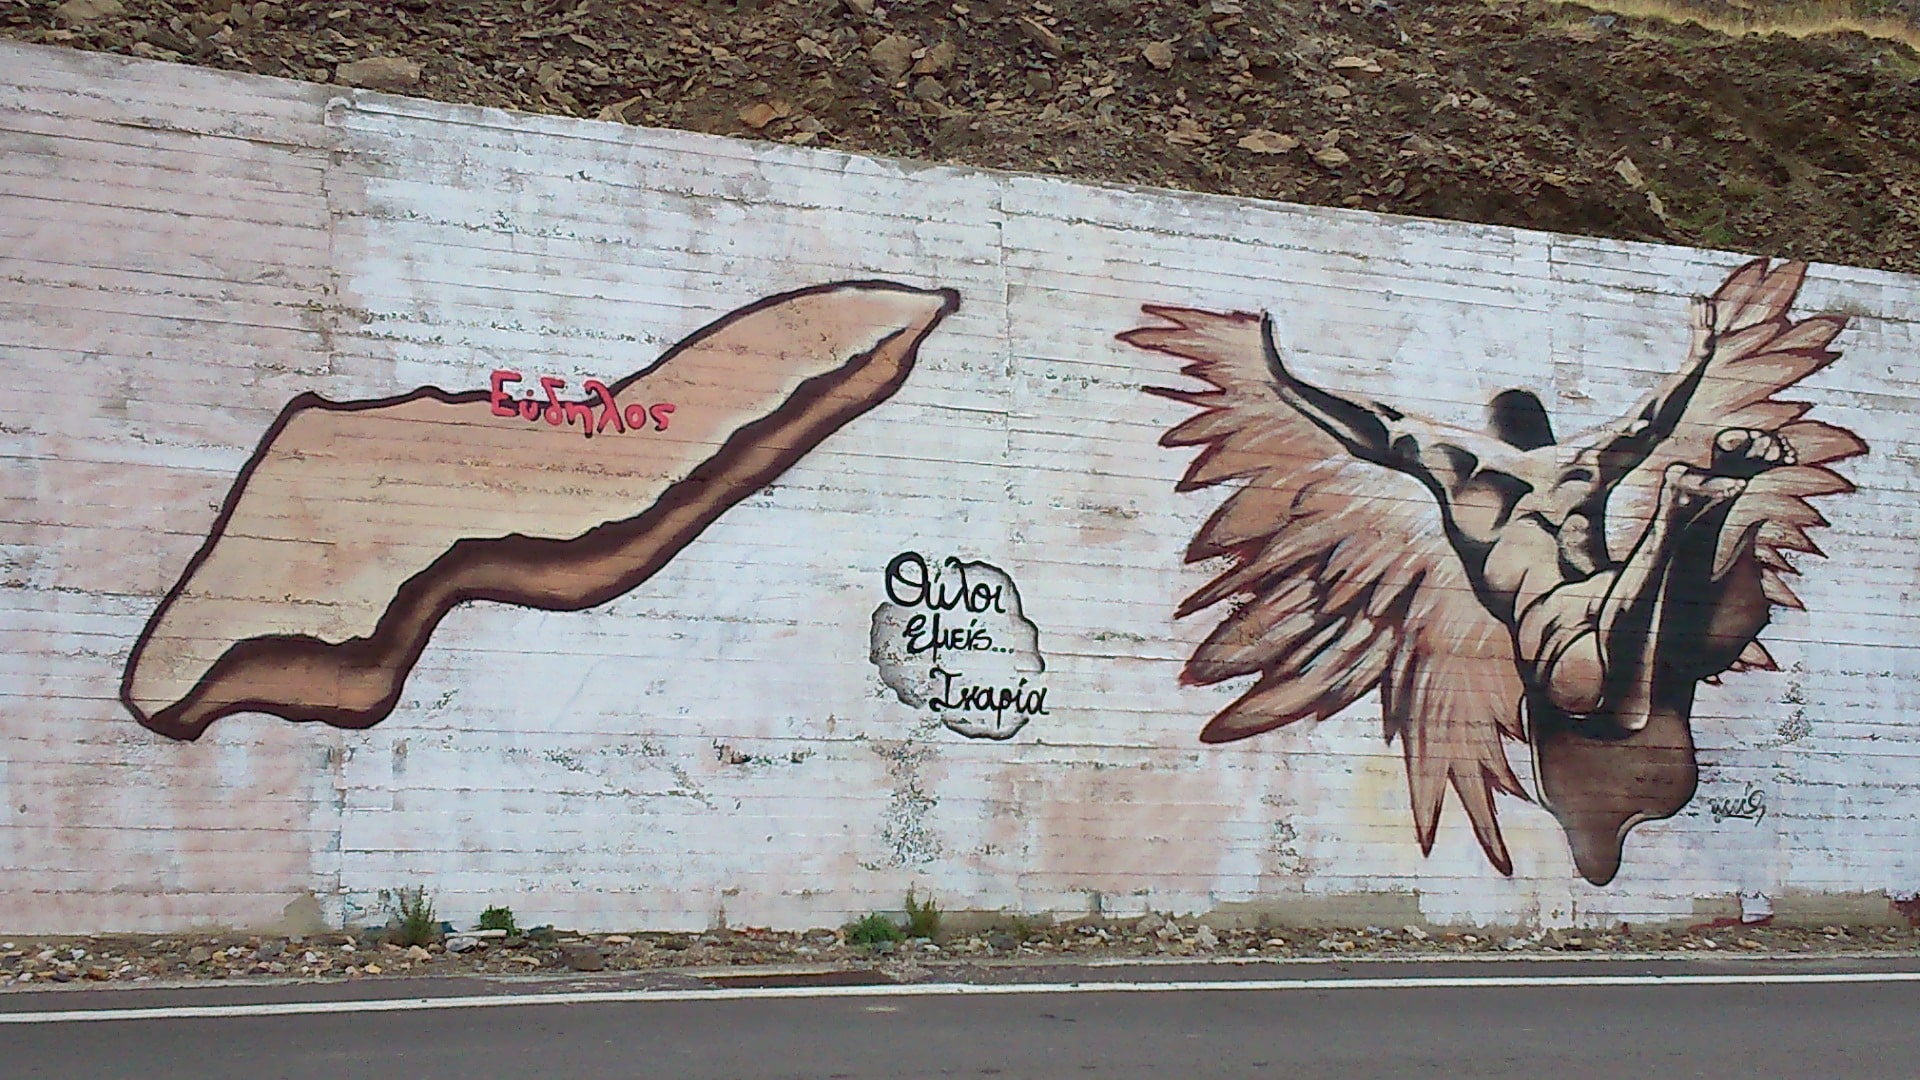 Ikaria_and_Ikarus_graffiti_at_Evdilos,_Ikaria_island_-_Greece